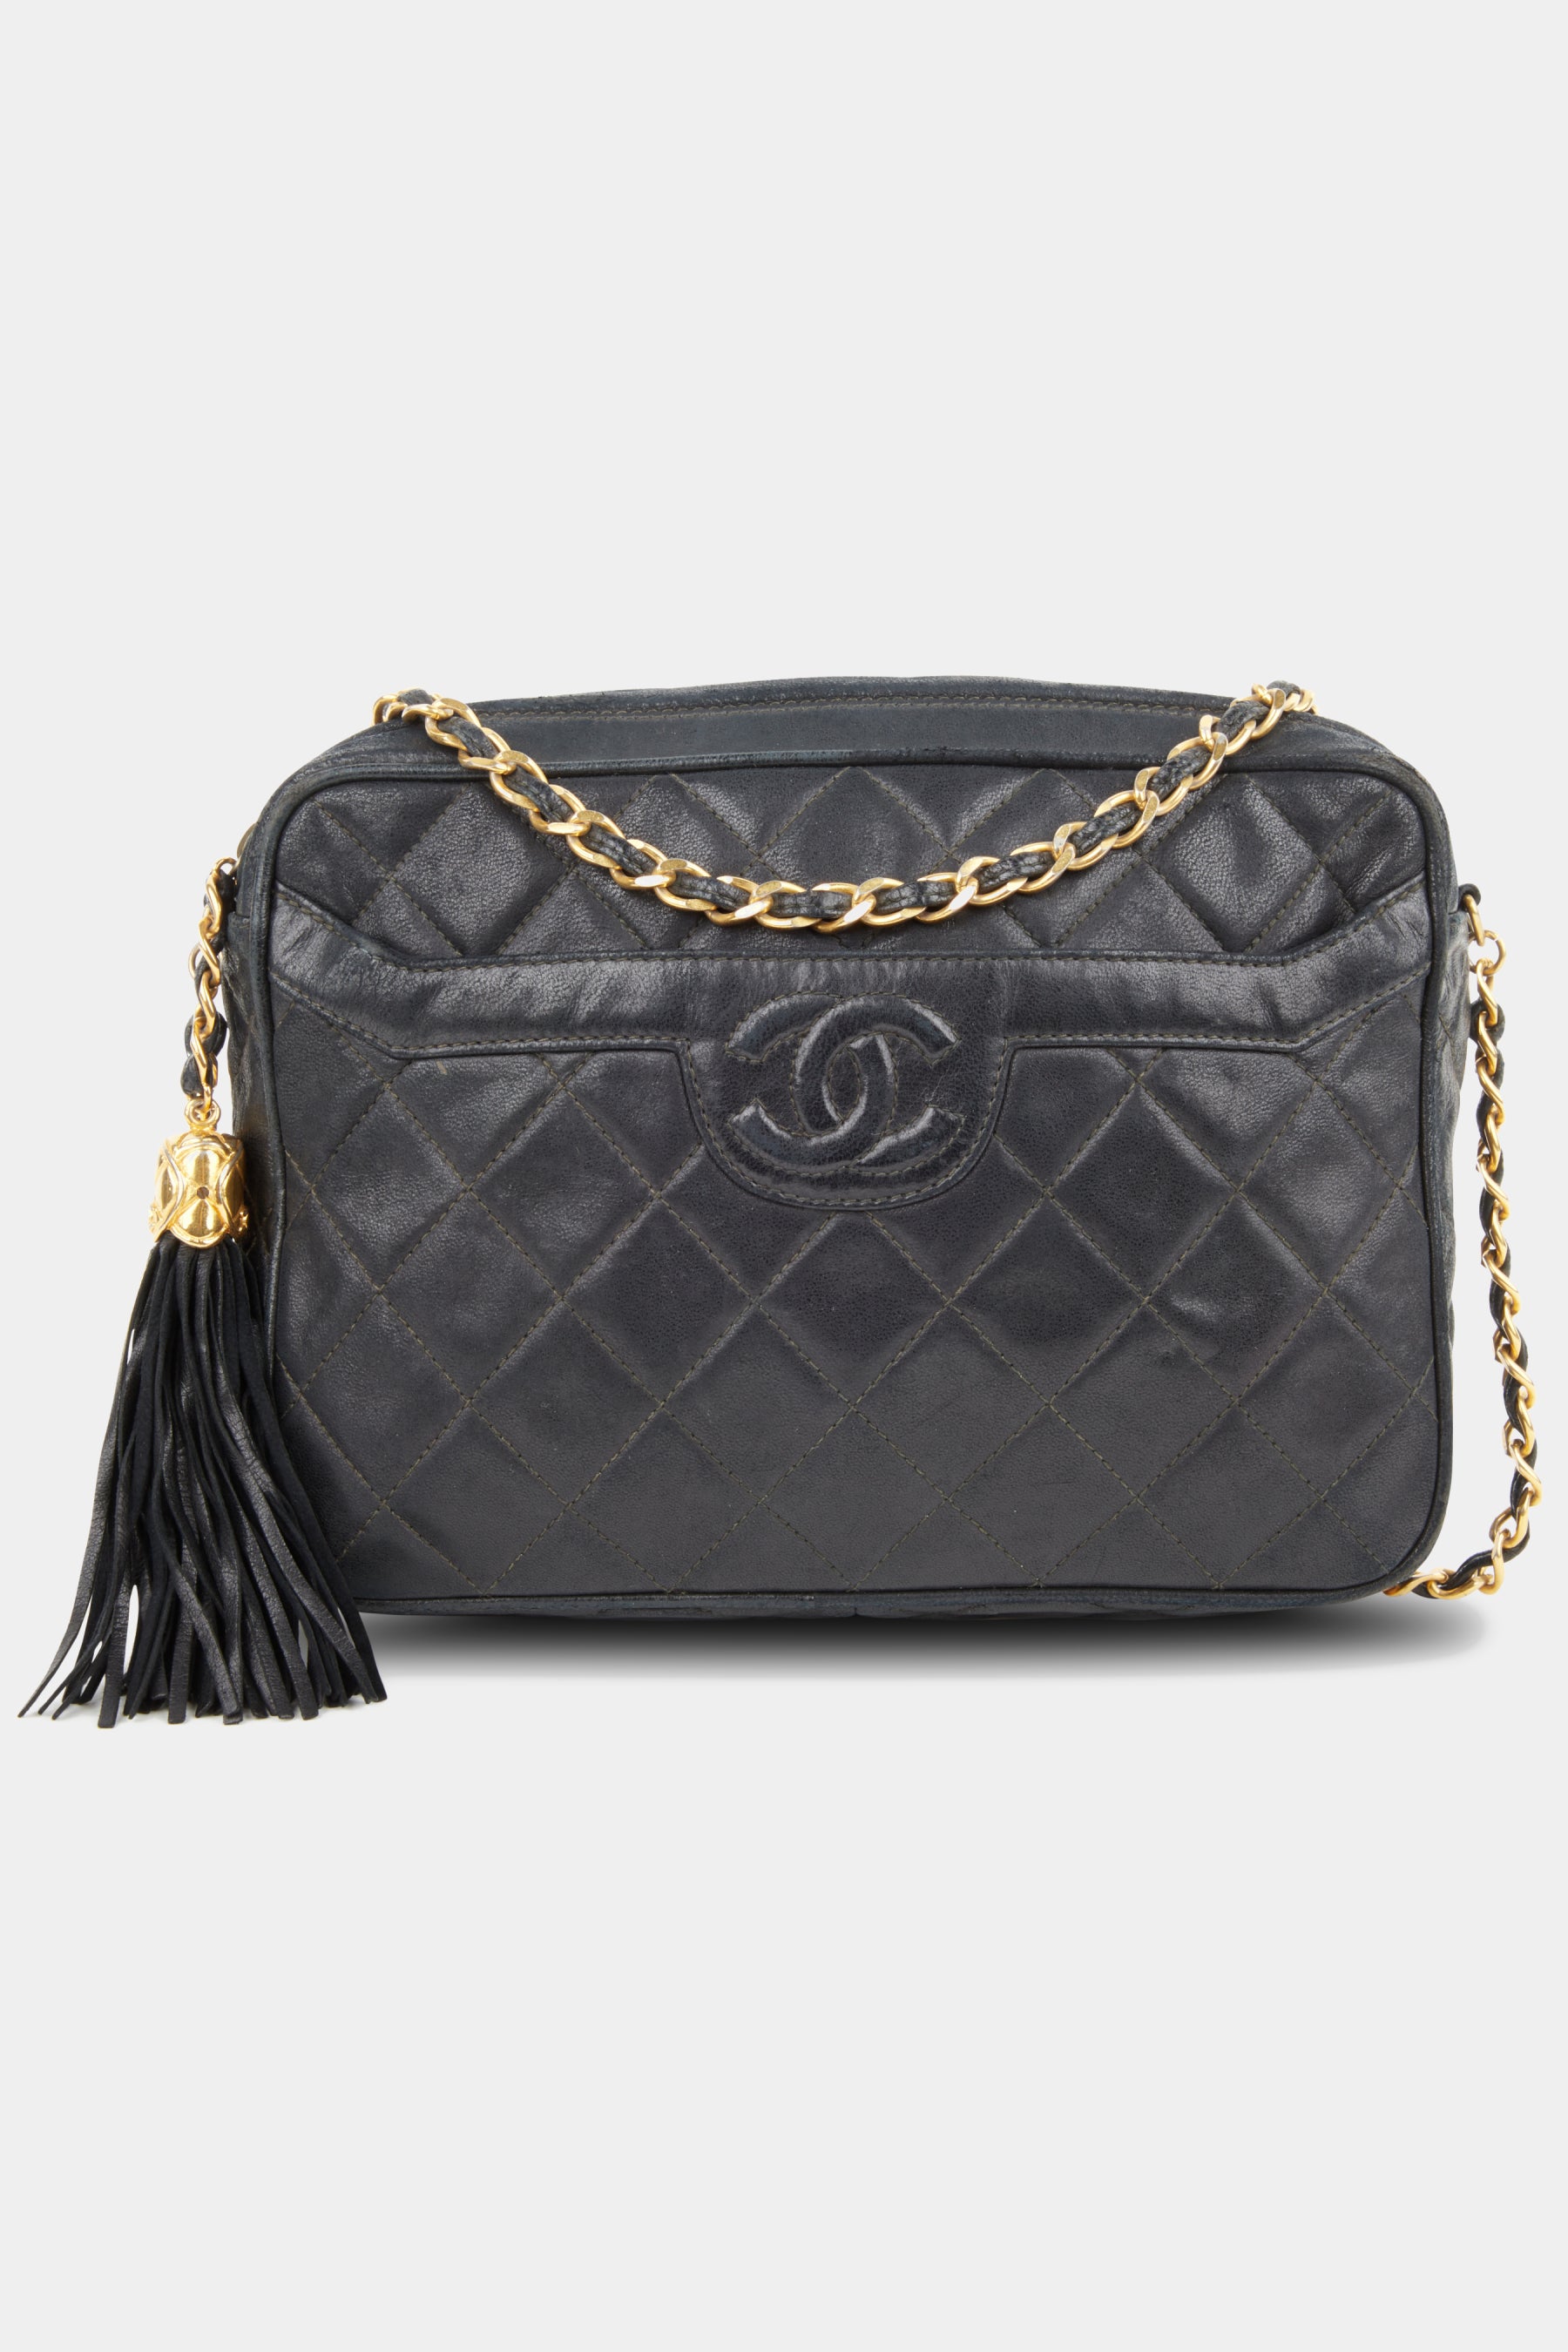 Sac Chanel Karl Lagerfeld Discount, SAVE 34% 